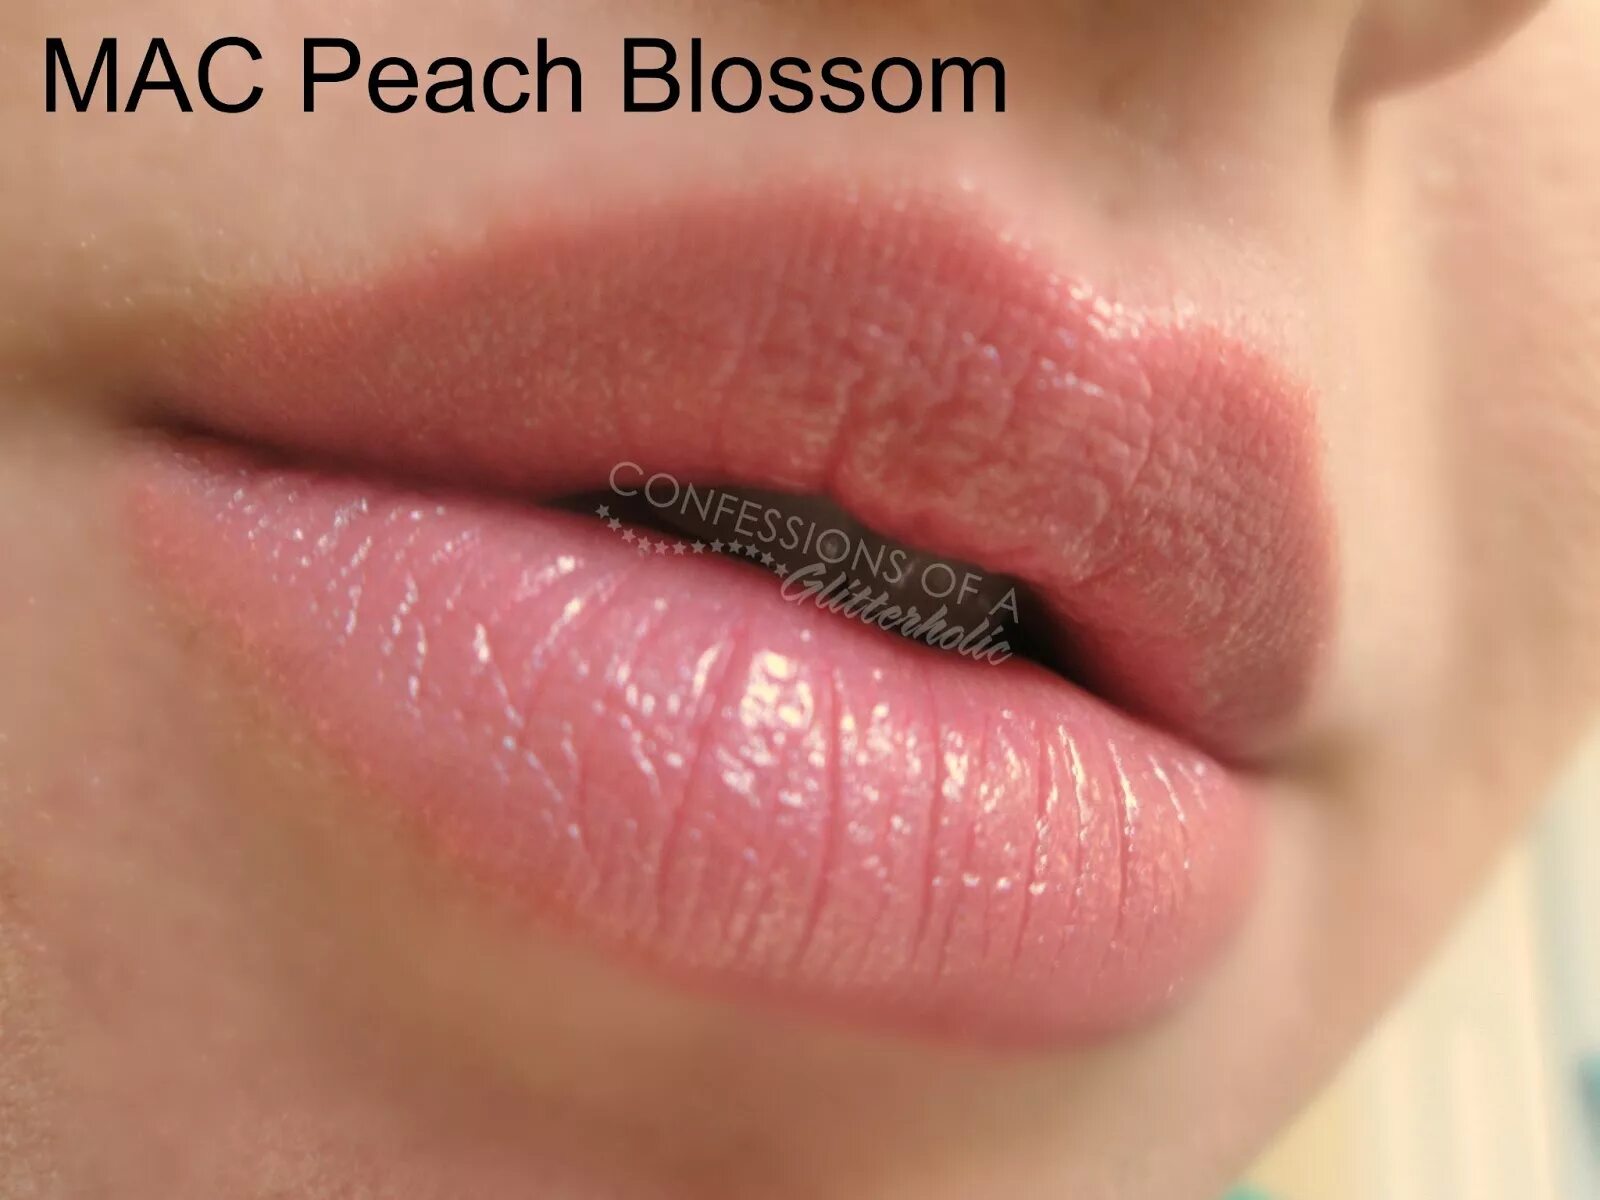 Помада Mac 216 Peach Blossom. Mac 812 Peach Blossom помада. Mac Peach Blossom помада. Mac Lipstick Cremesheen Peach Blossom. Peach blossom 4 карон